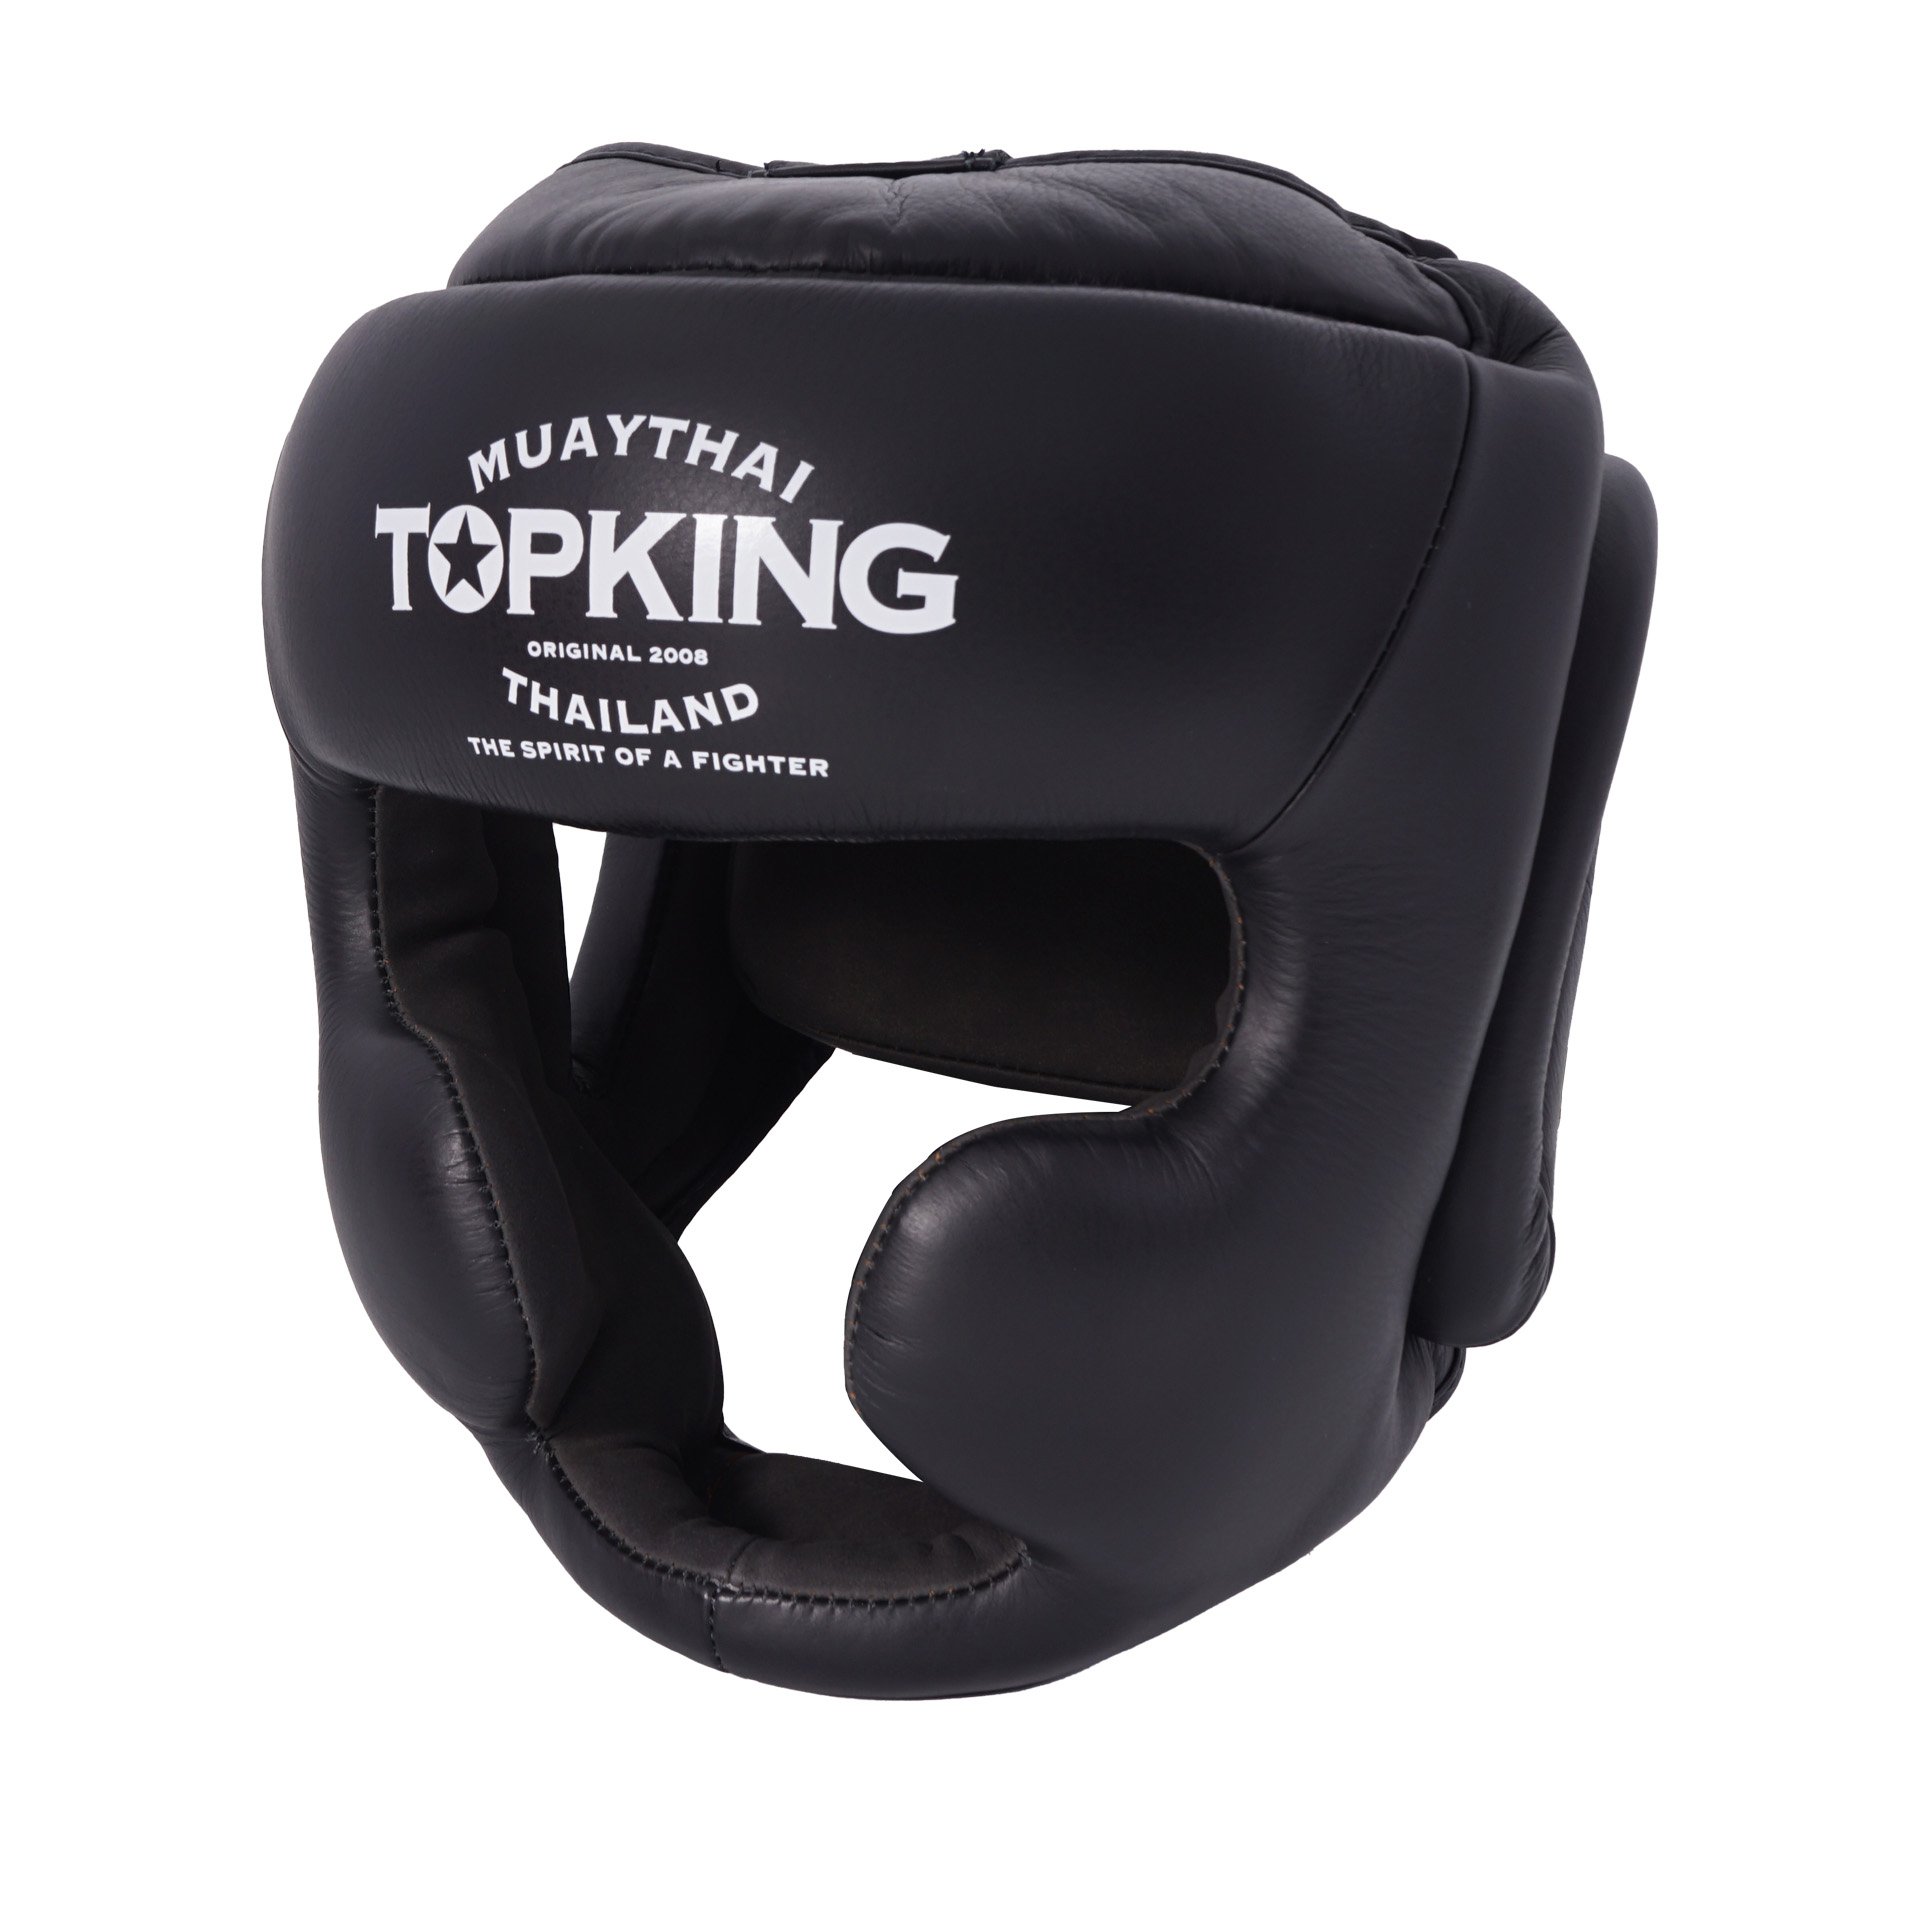 TOPKING HEAD GUARD “FULL COVERAGE” - topkingboxing